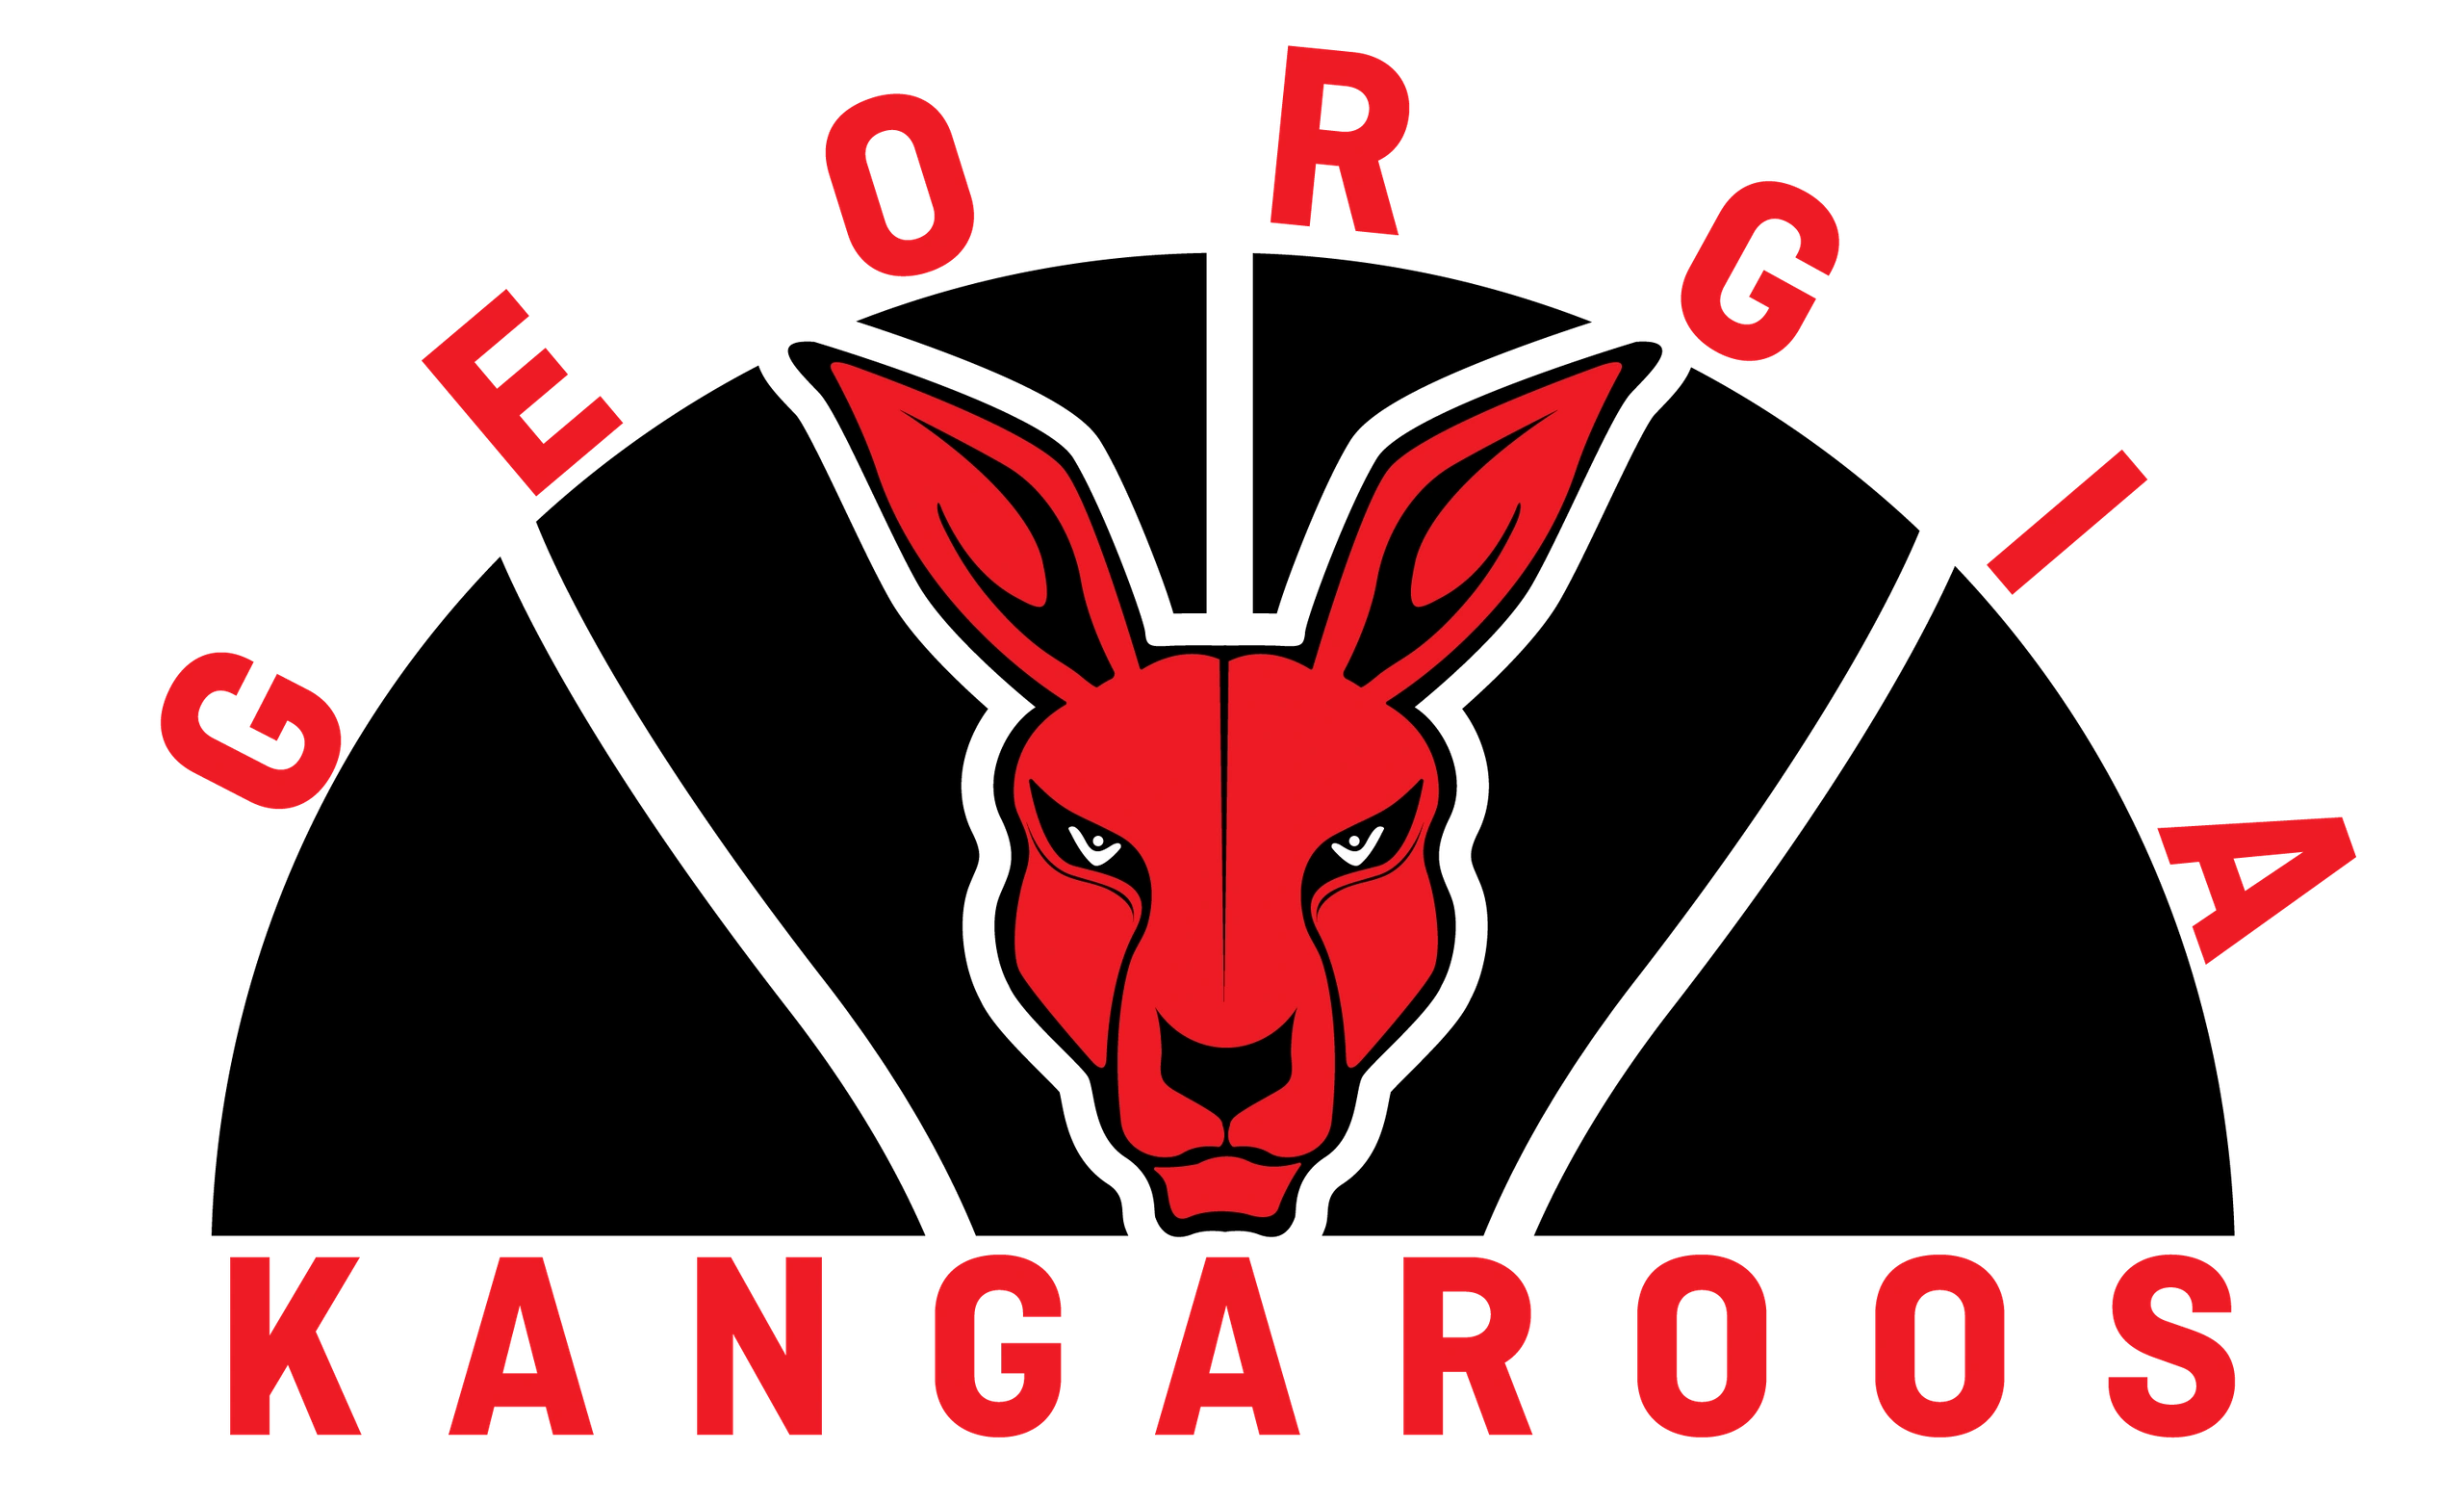 Georgia Kangaroos Professional Basketball Team